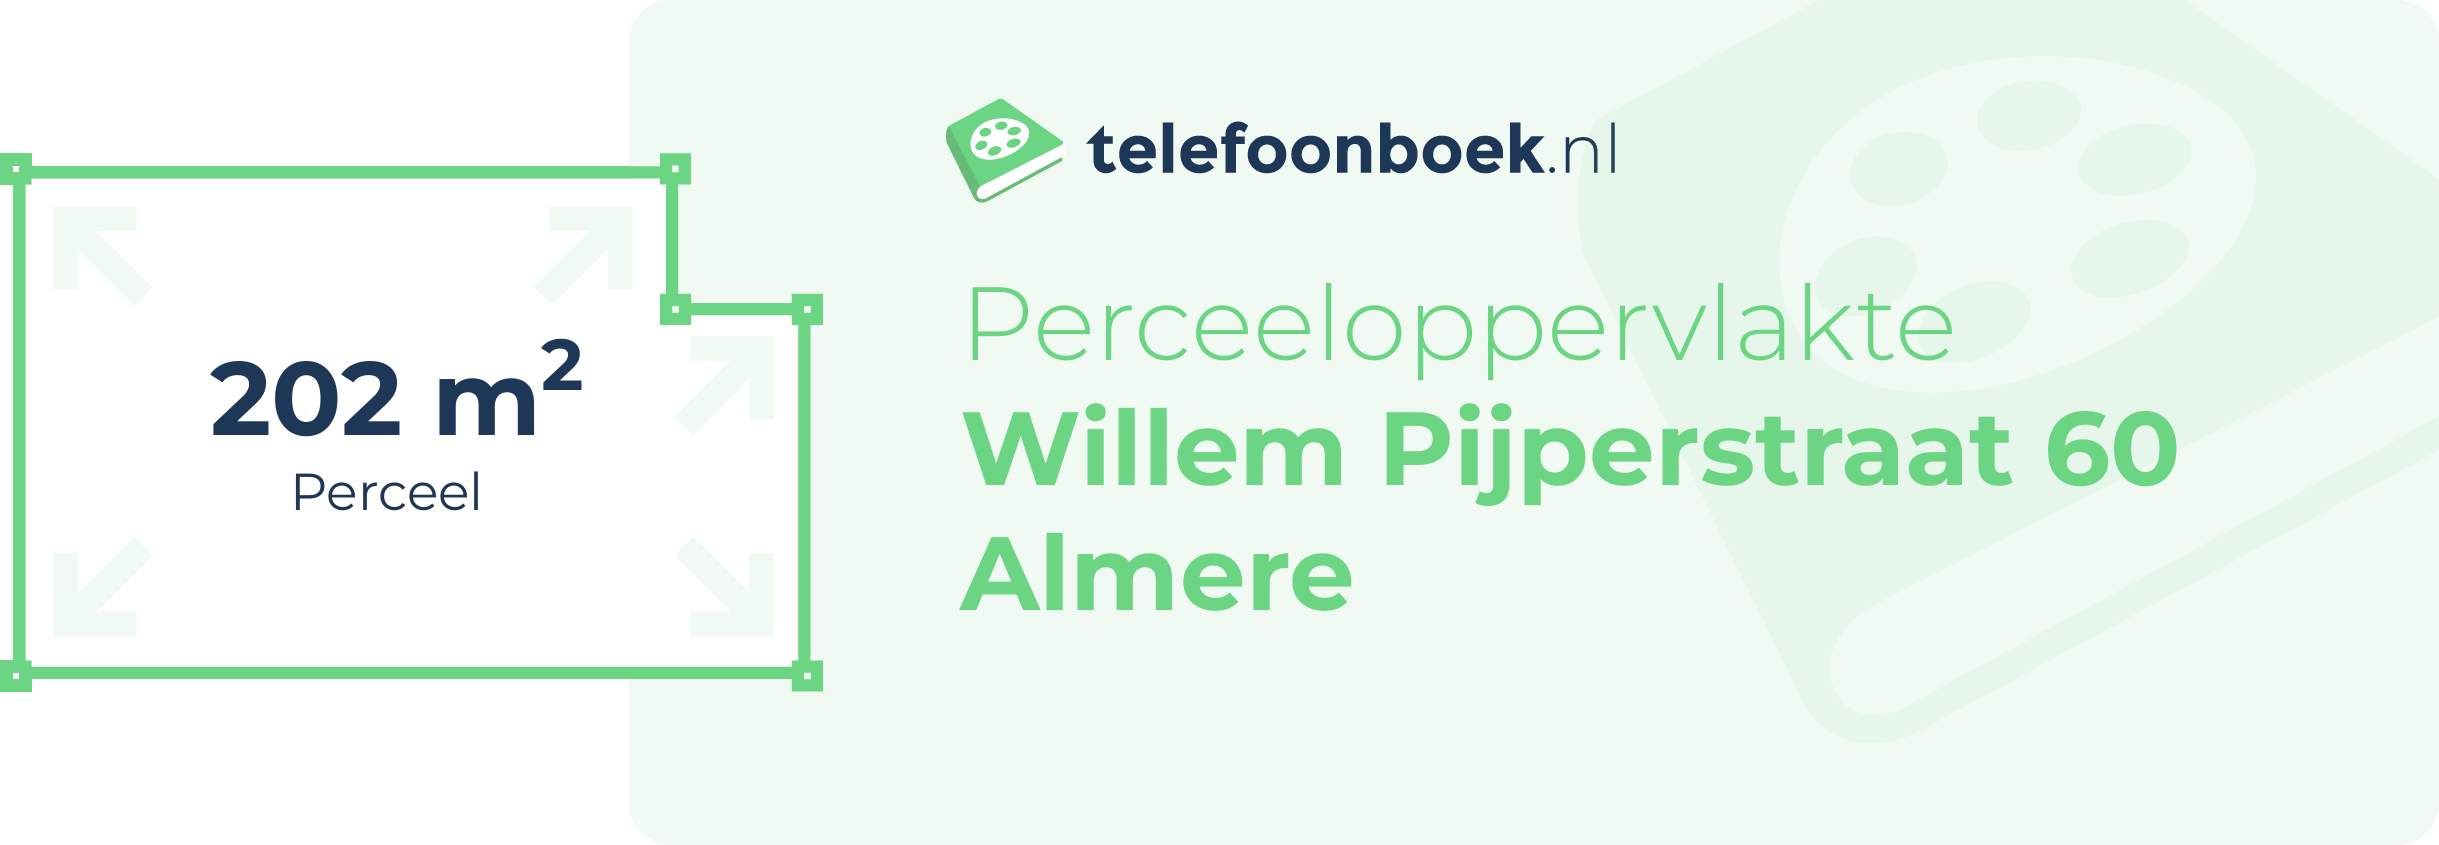 Perceeloppervlakte Willem Pijperstraat 60 Almere